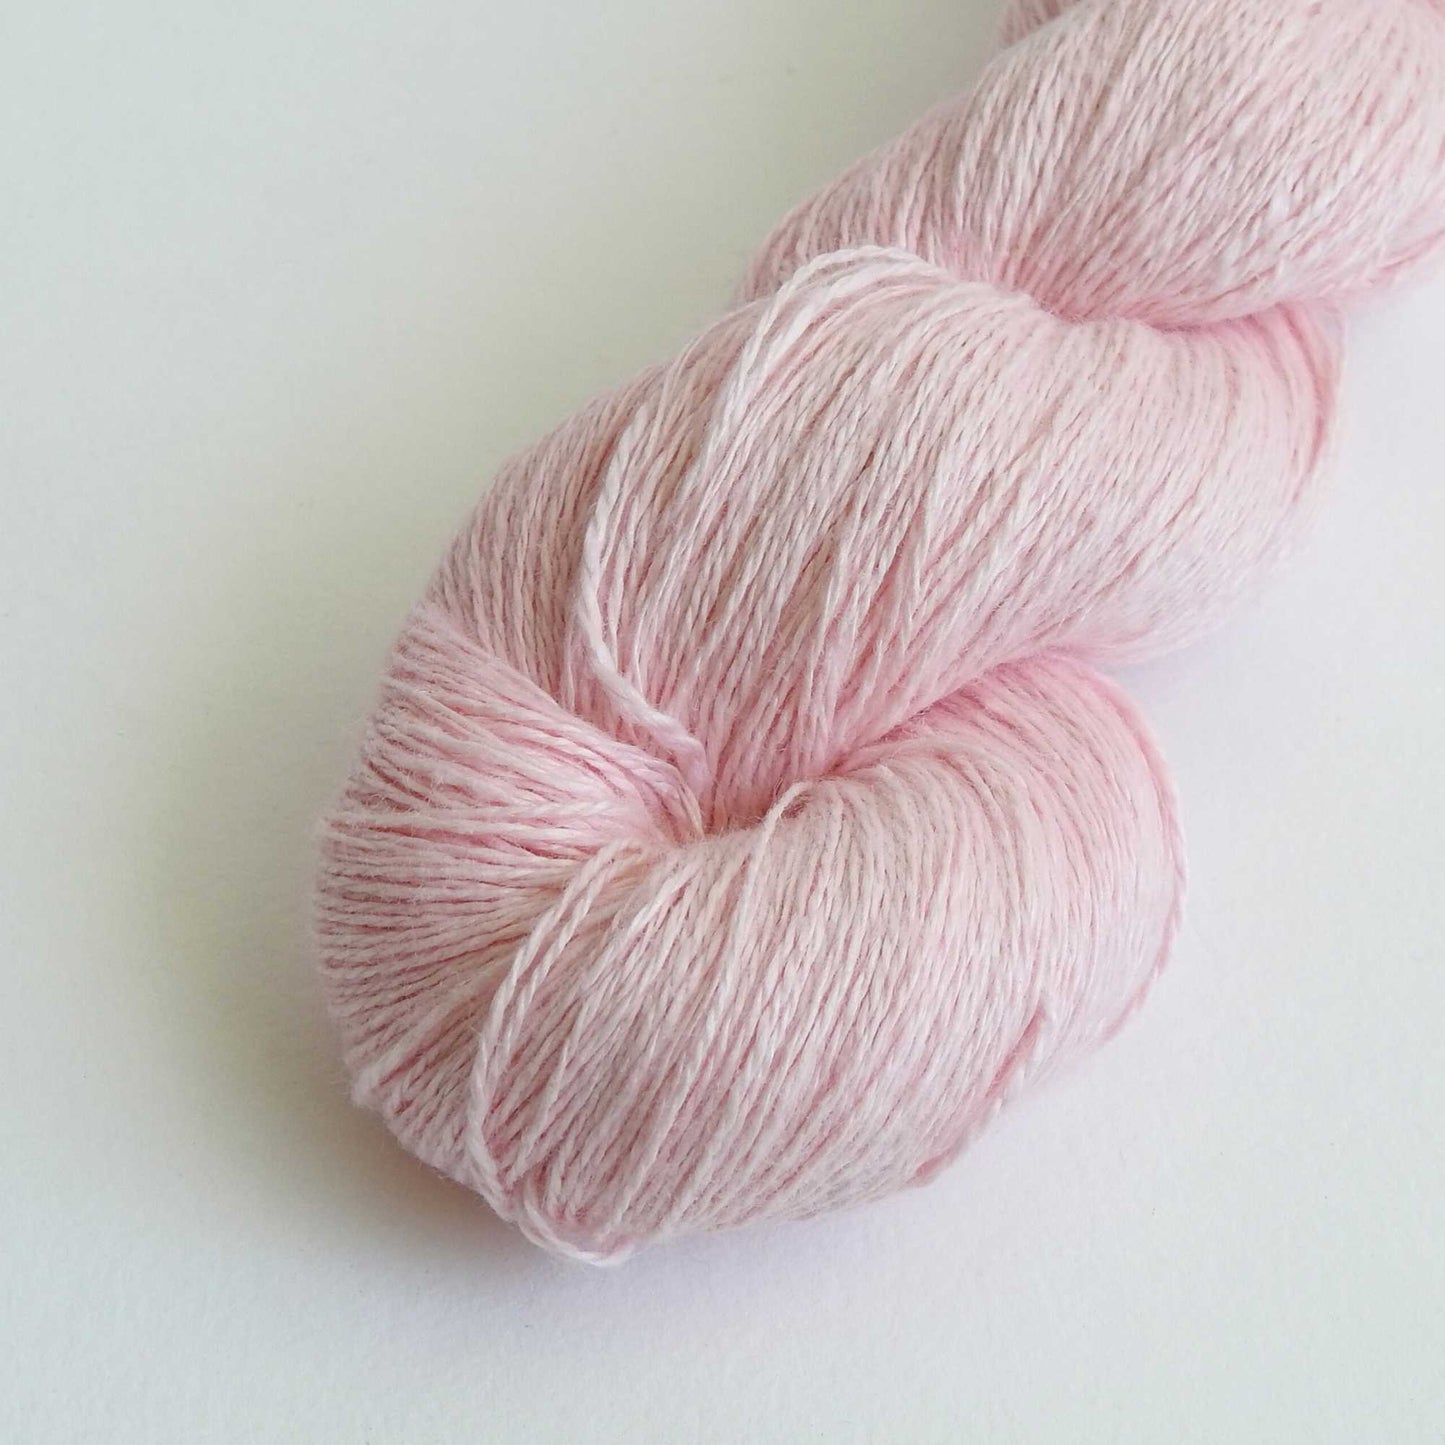 linen yarn in pink. seconds - on sale